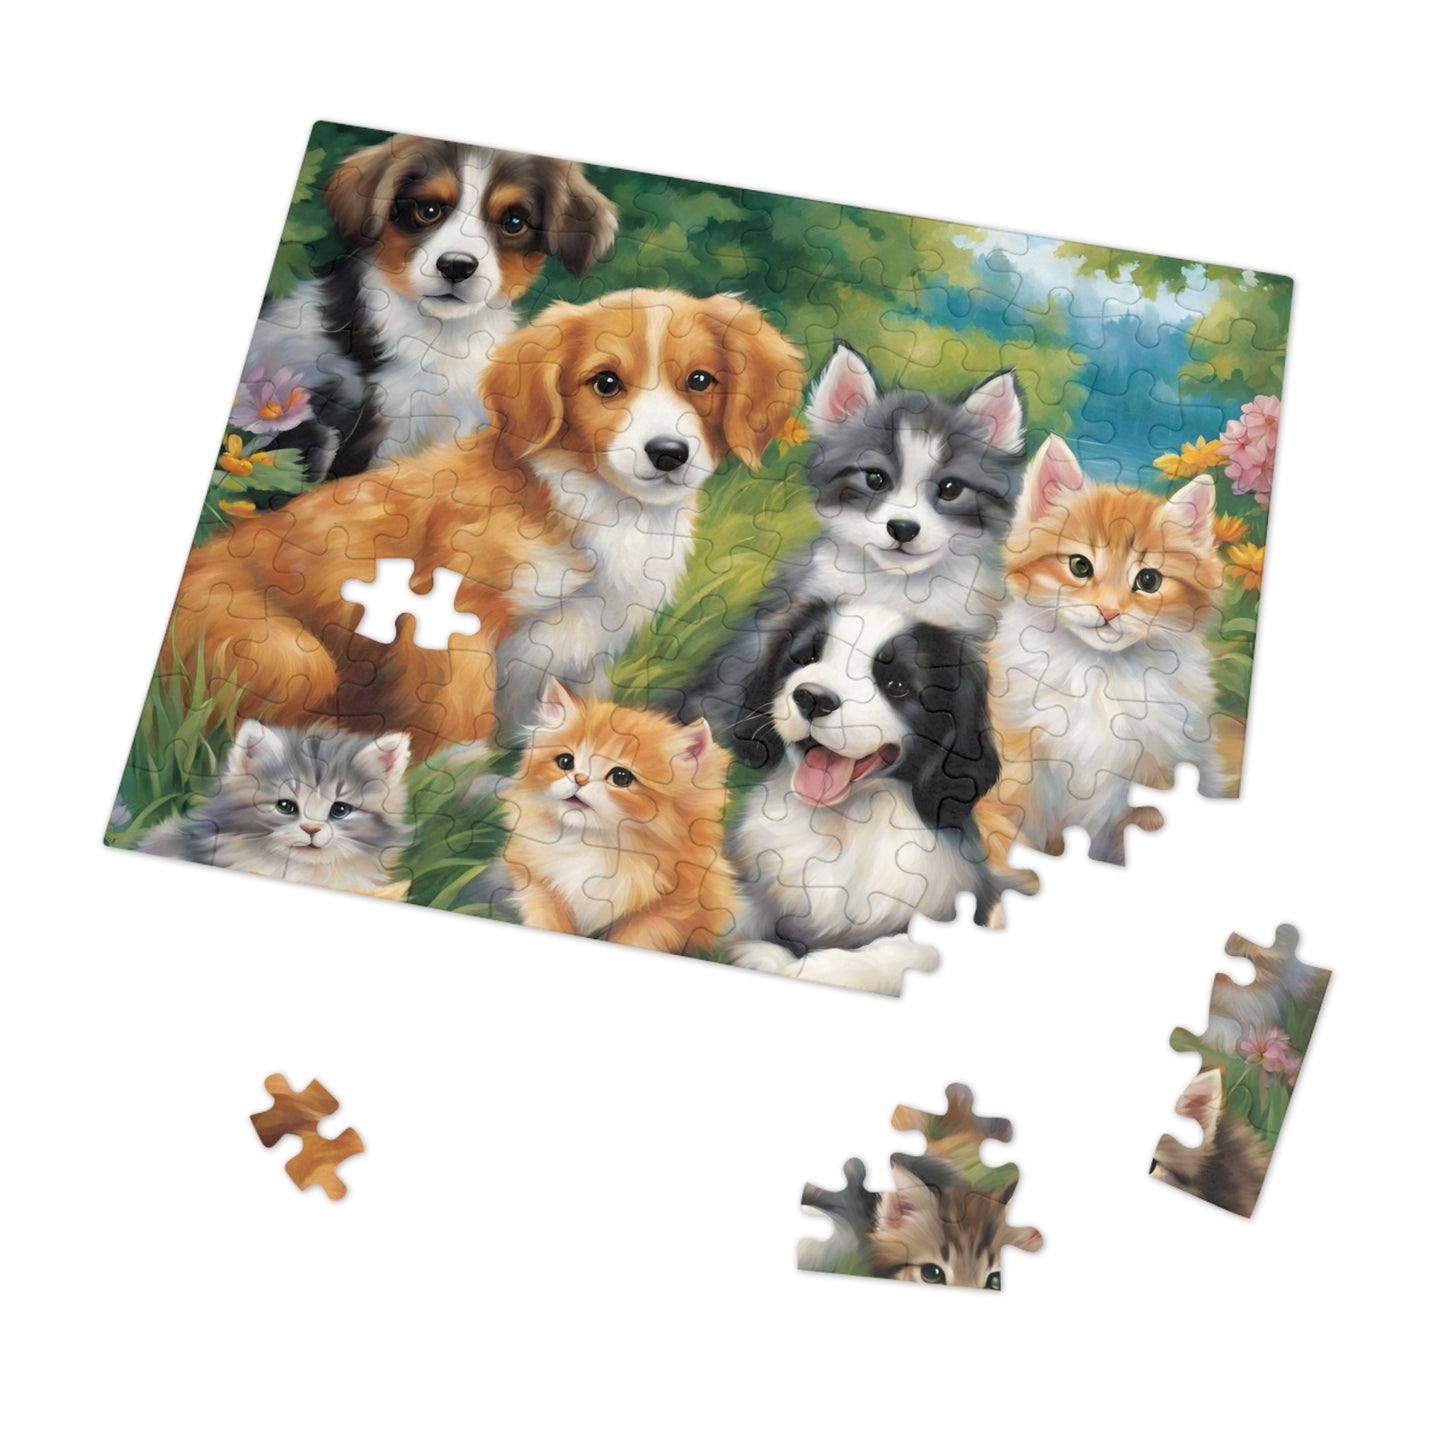 BRAIN GUARD Jigsaw Puzzle for Seniors